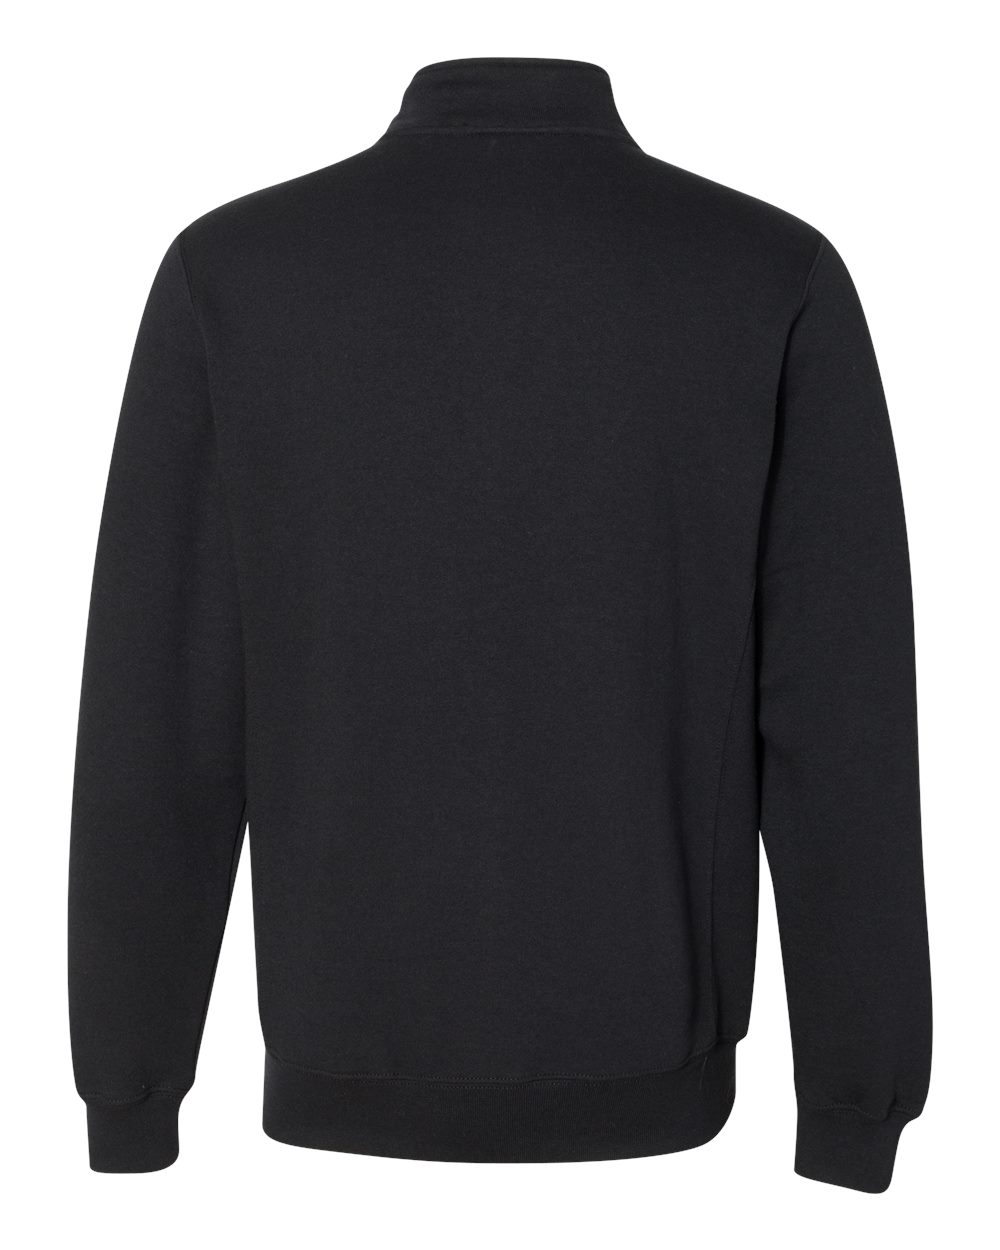 Russell Athletic Blank Plain Quarter-Zip Cadet Collar Sweatshirt 1Z4HBM ...